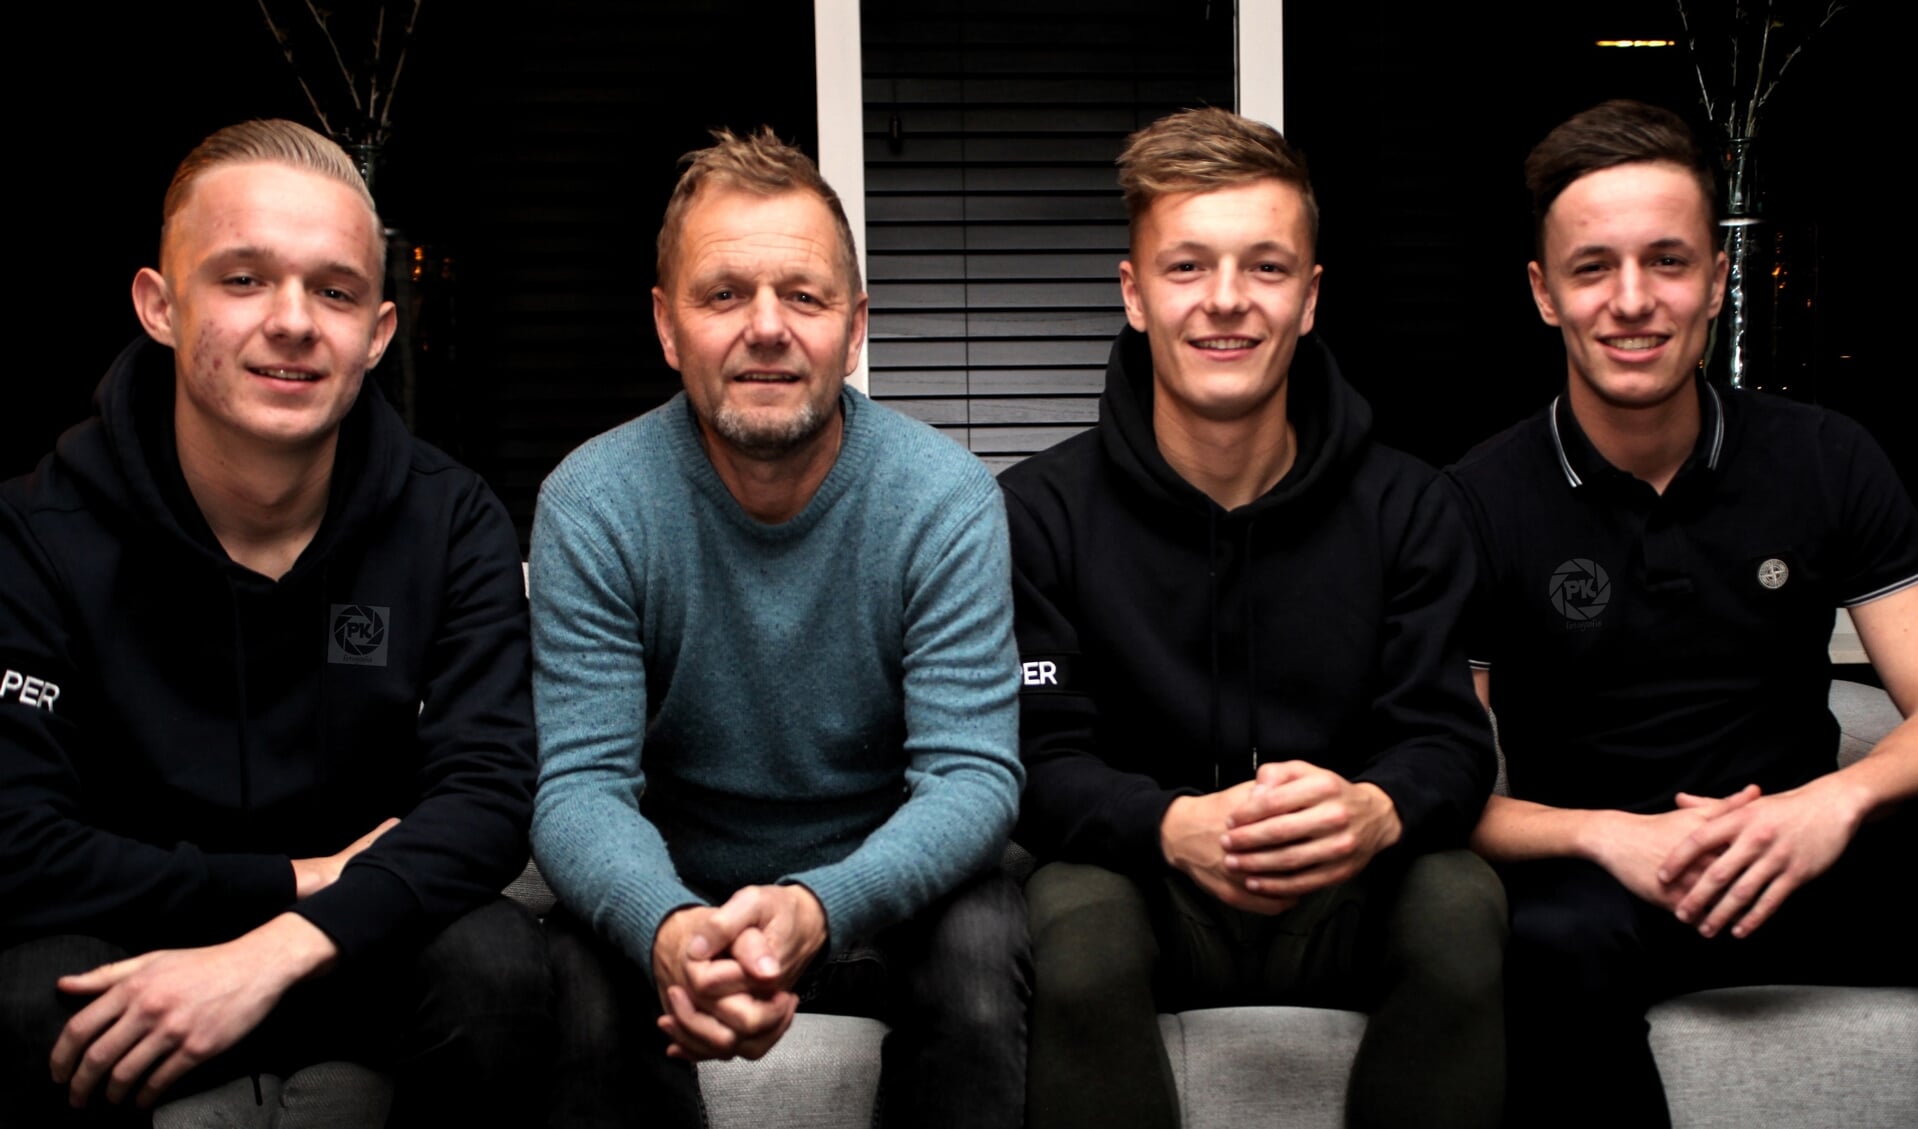 Bjorn, vader John, Sven en Brent Blummel poserend als echt voetbalgezin